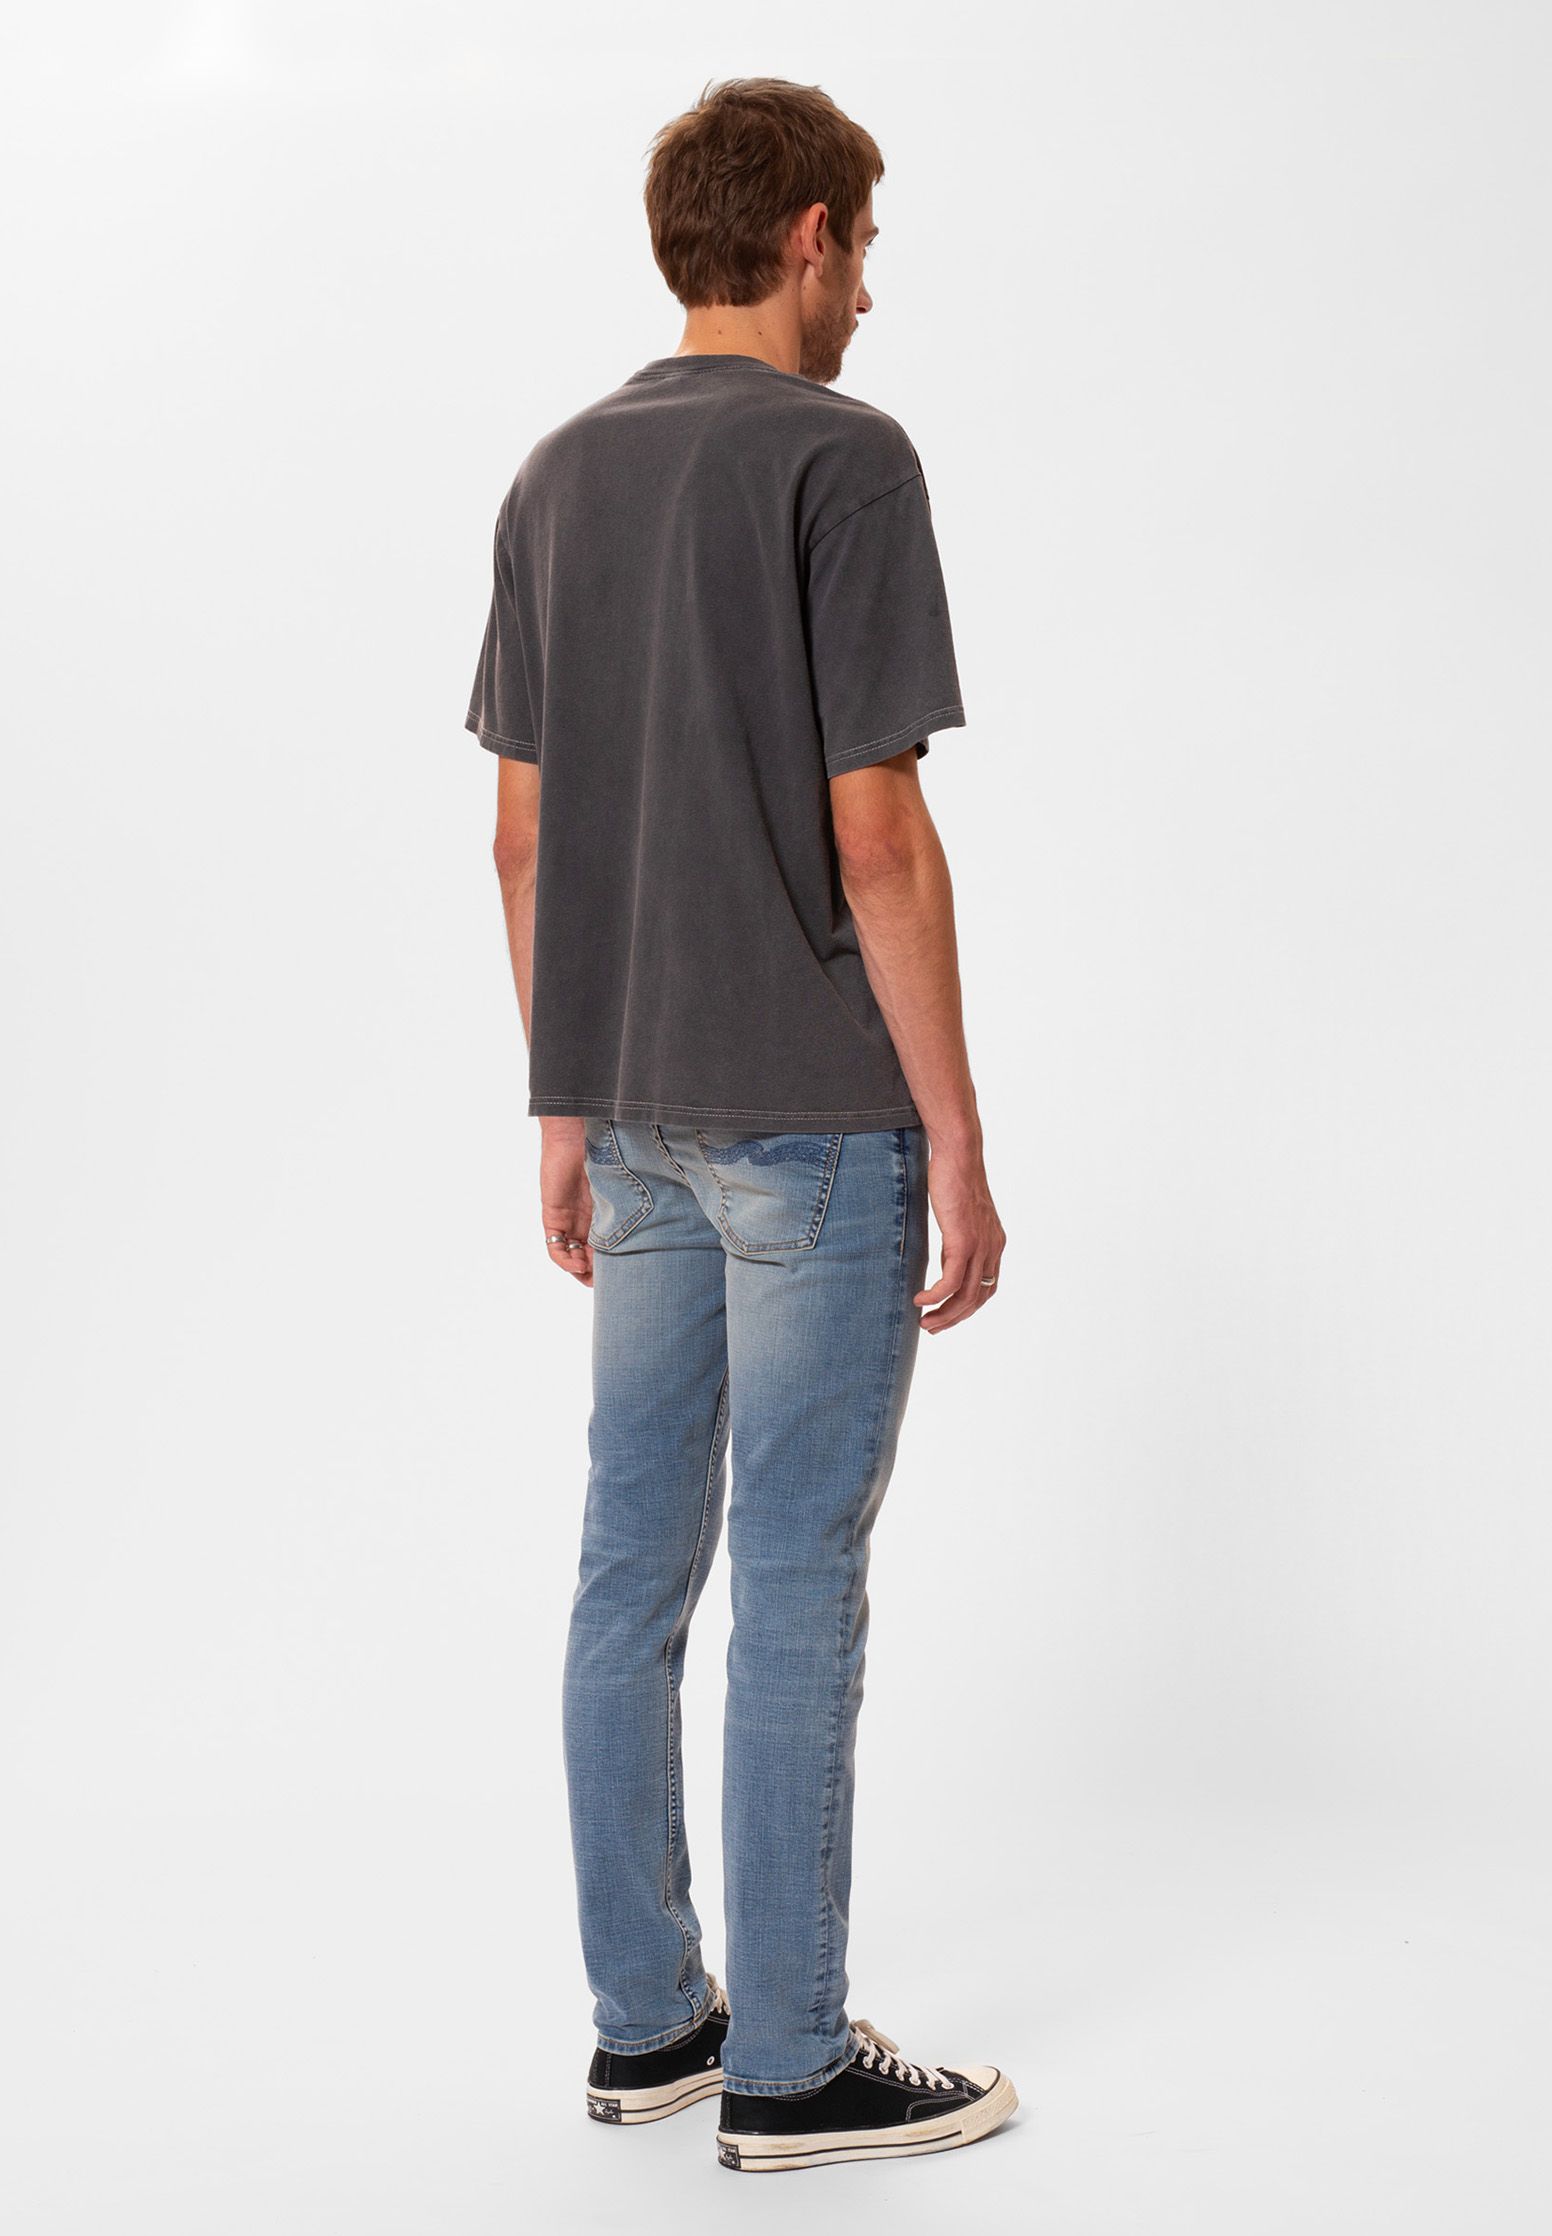 Hosen, T-shirt, Person, Stehend, Jeans